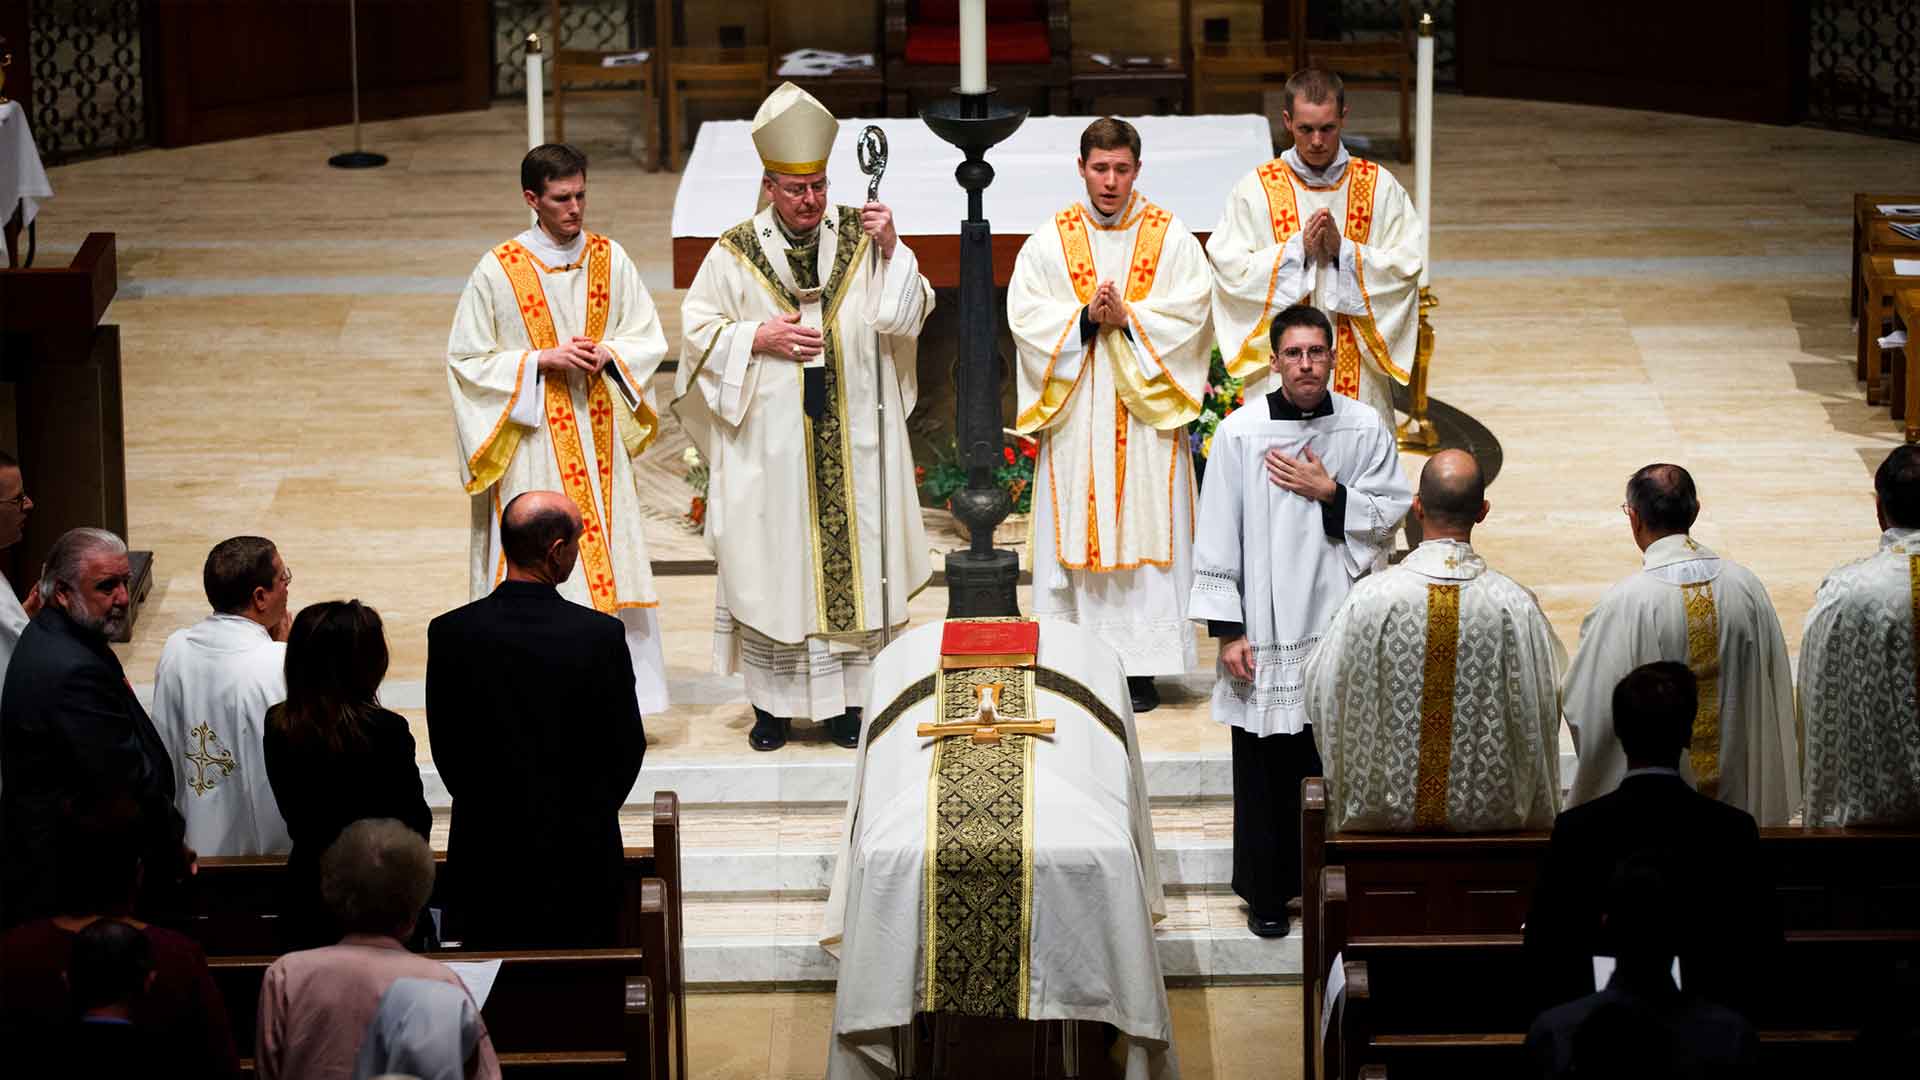 Funeral mass inside Chapel of St. Thomas Aquinas